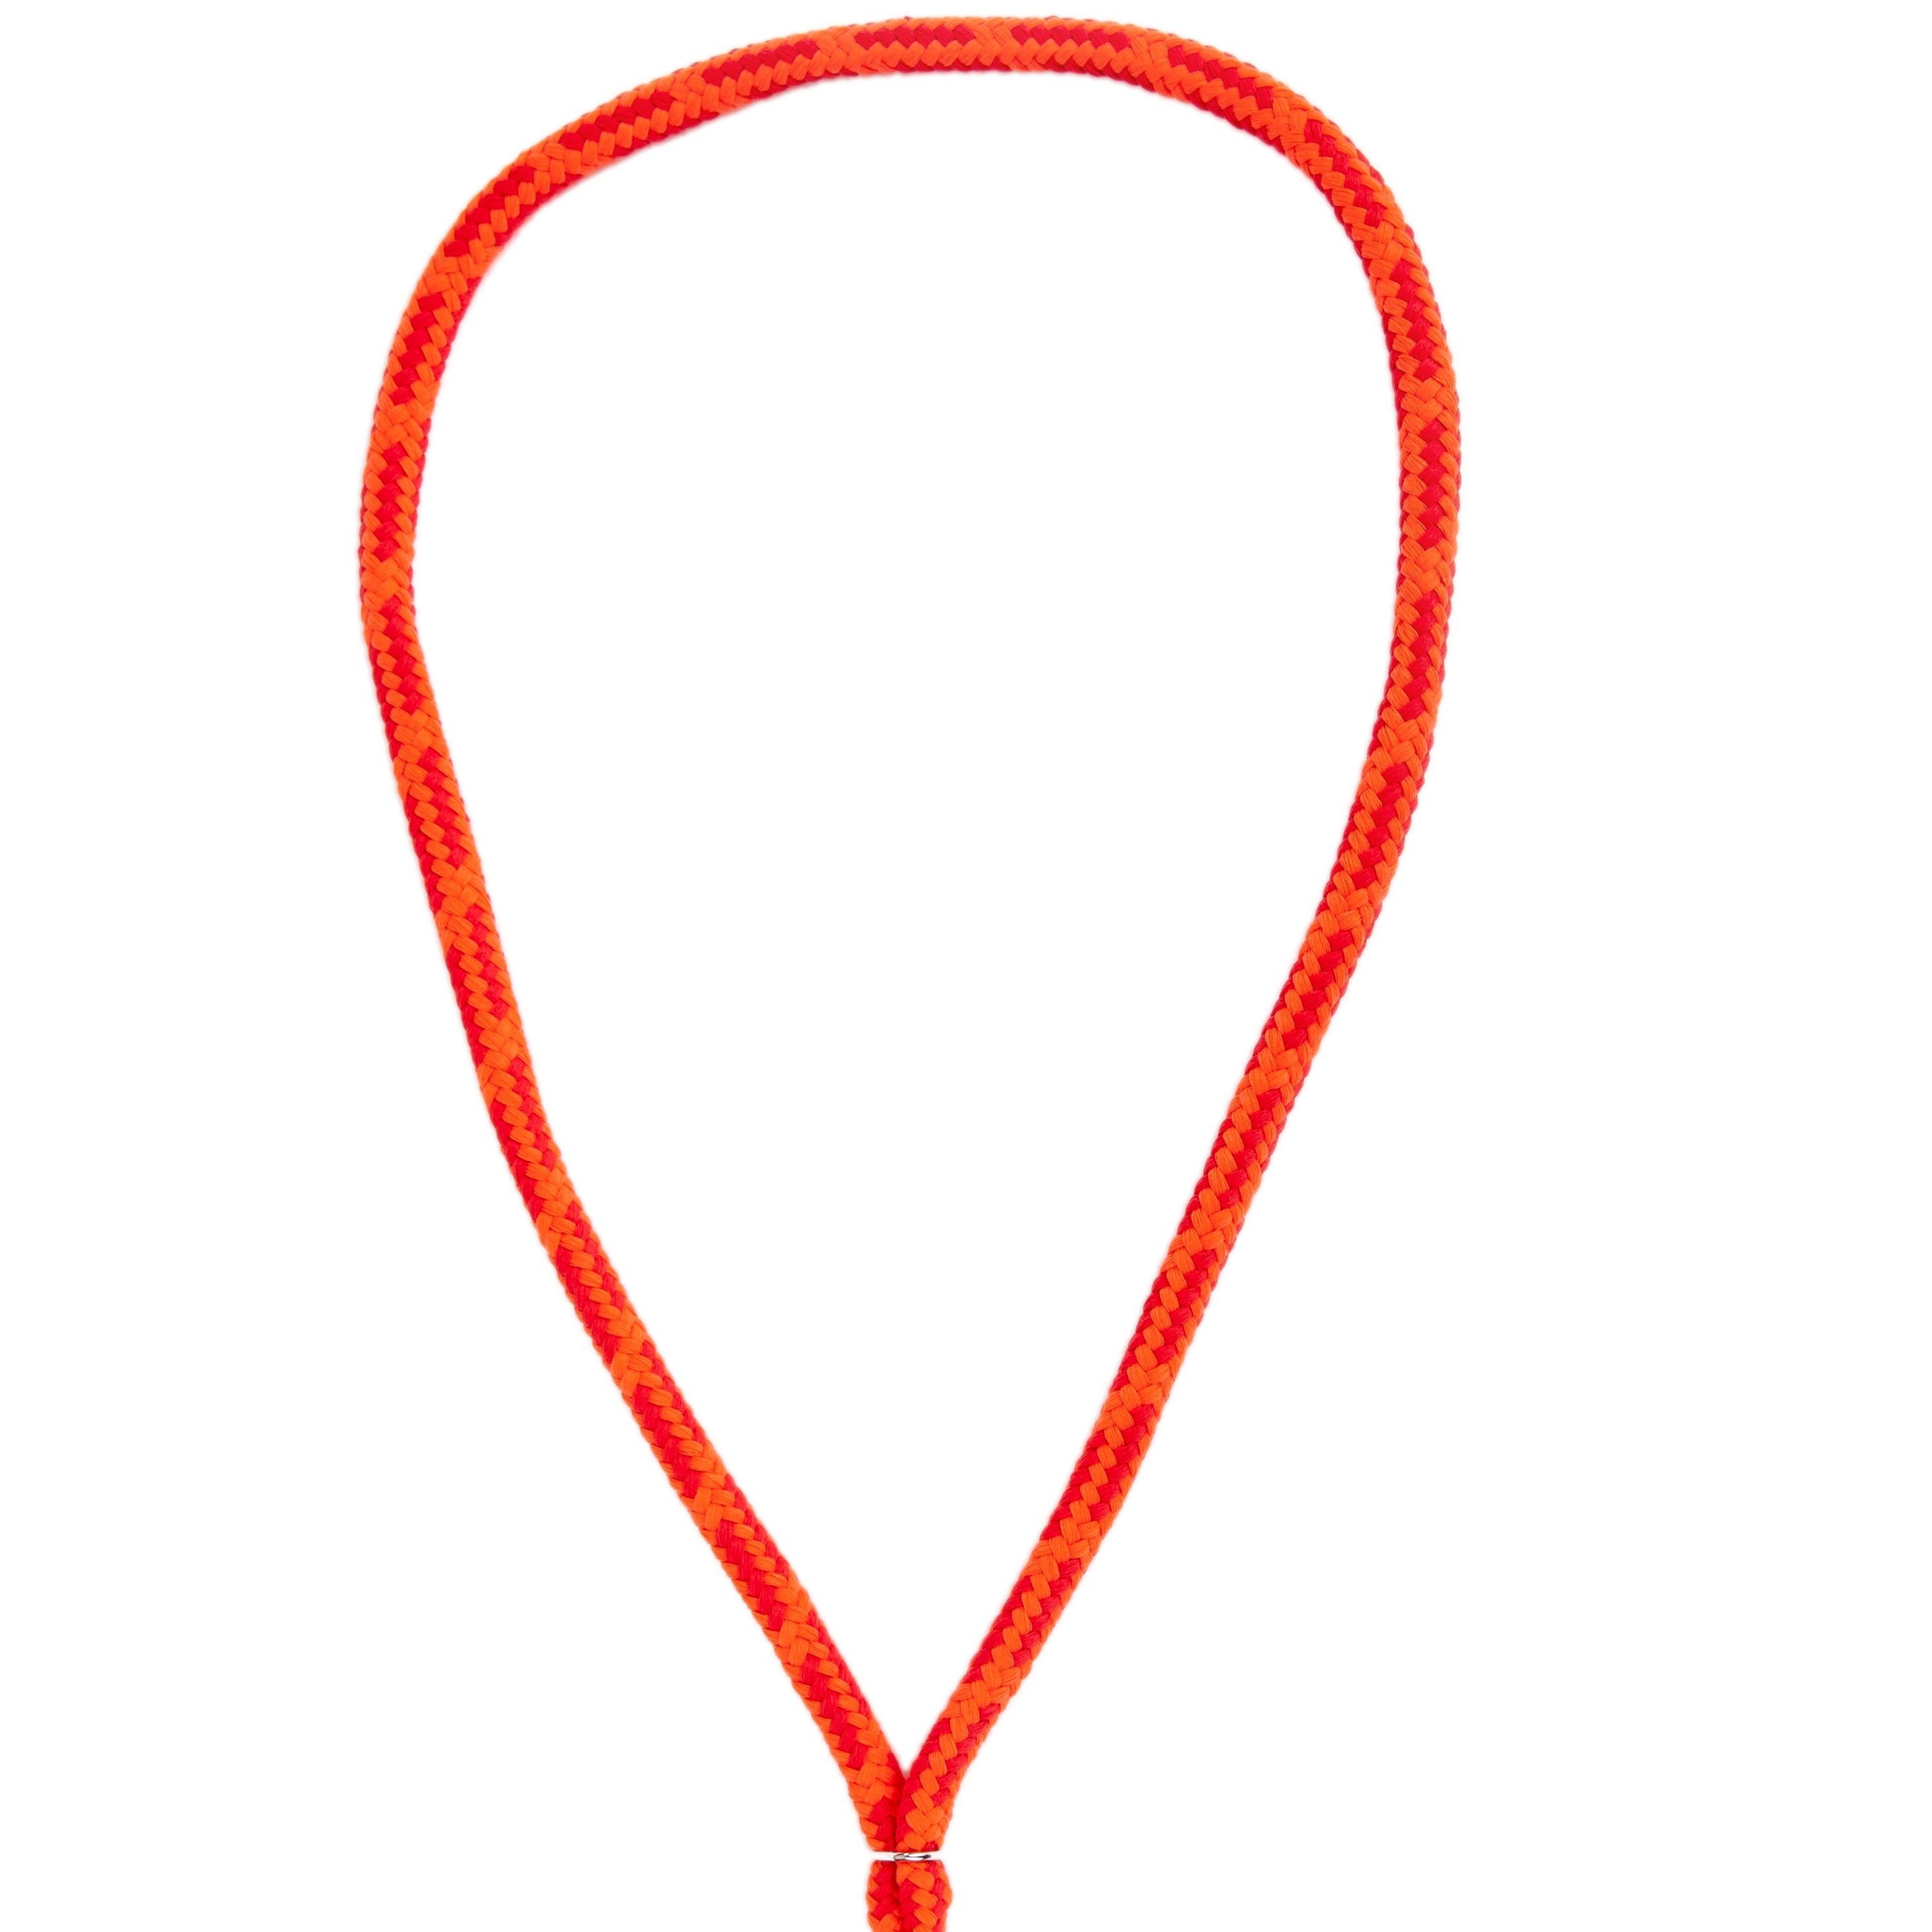 USG Hilfszügel USG Halsring Soft größenverstellbar orange/rot